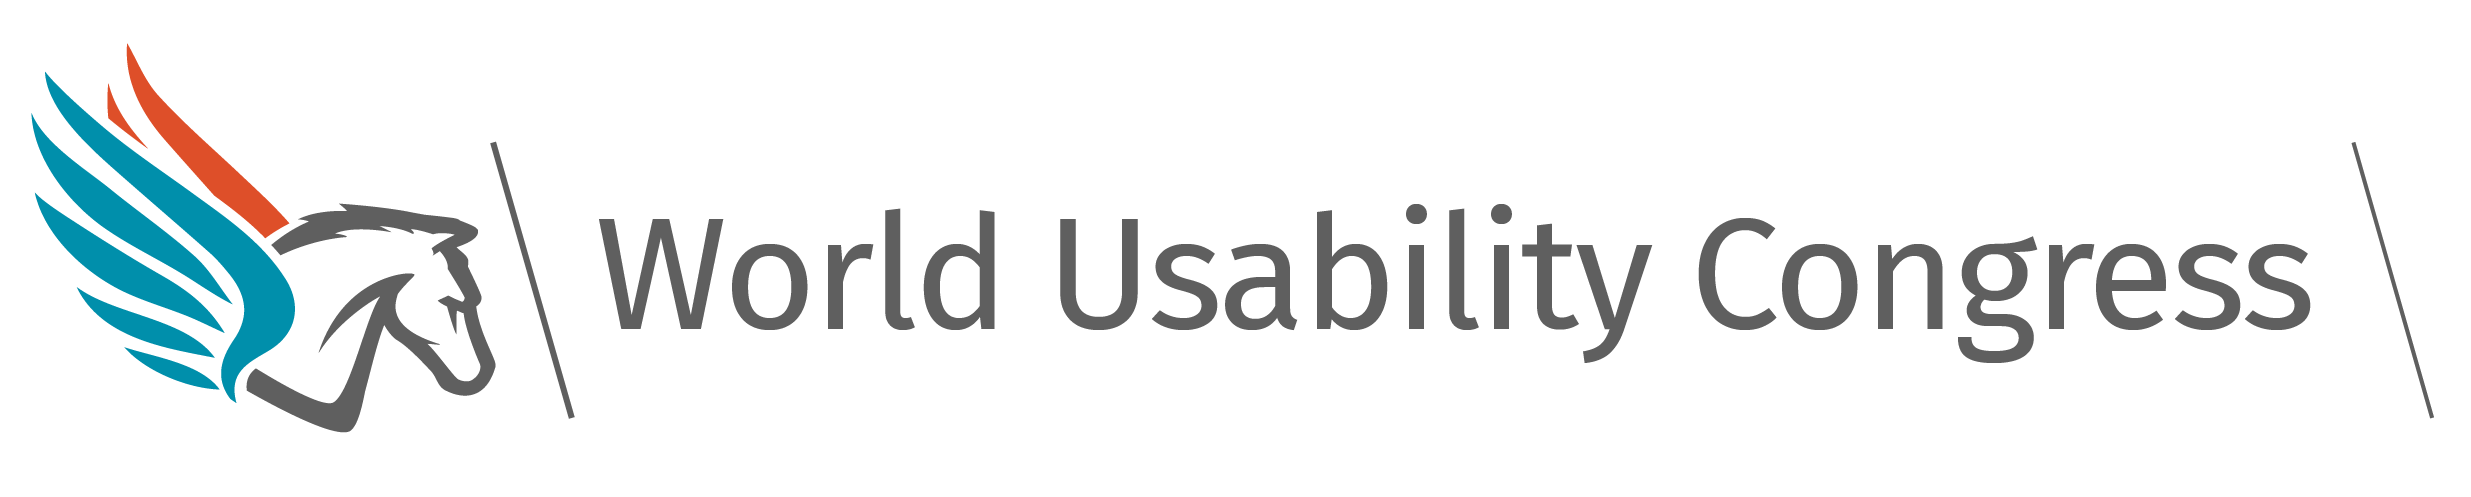 World Usability Congress